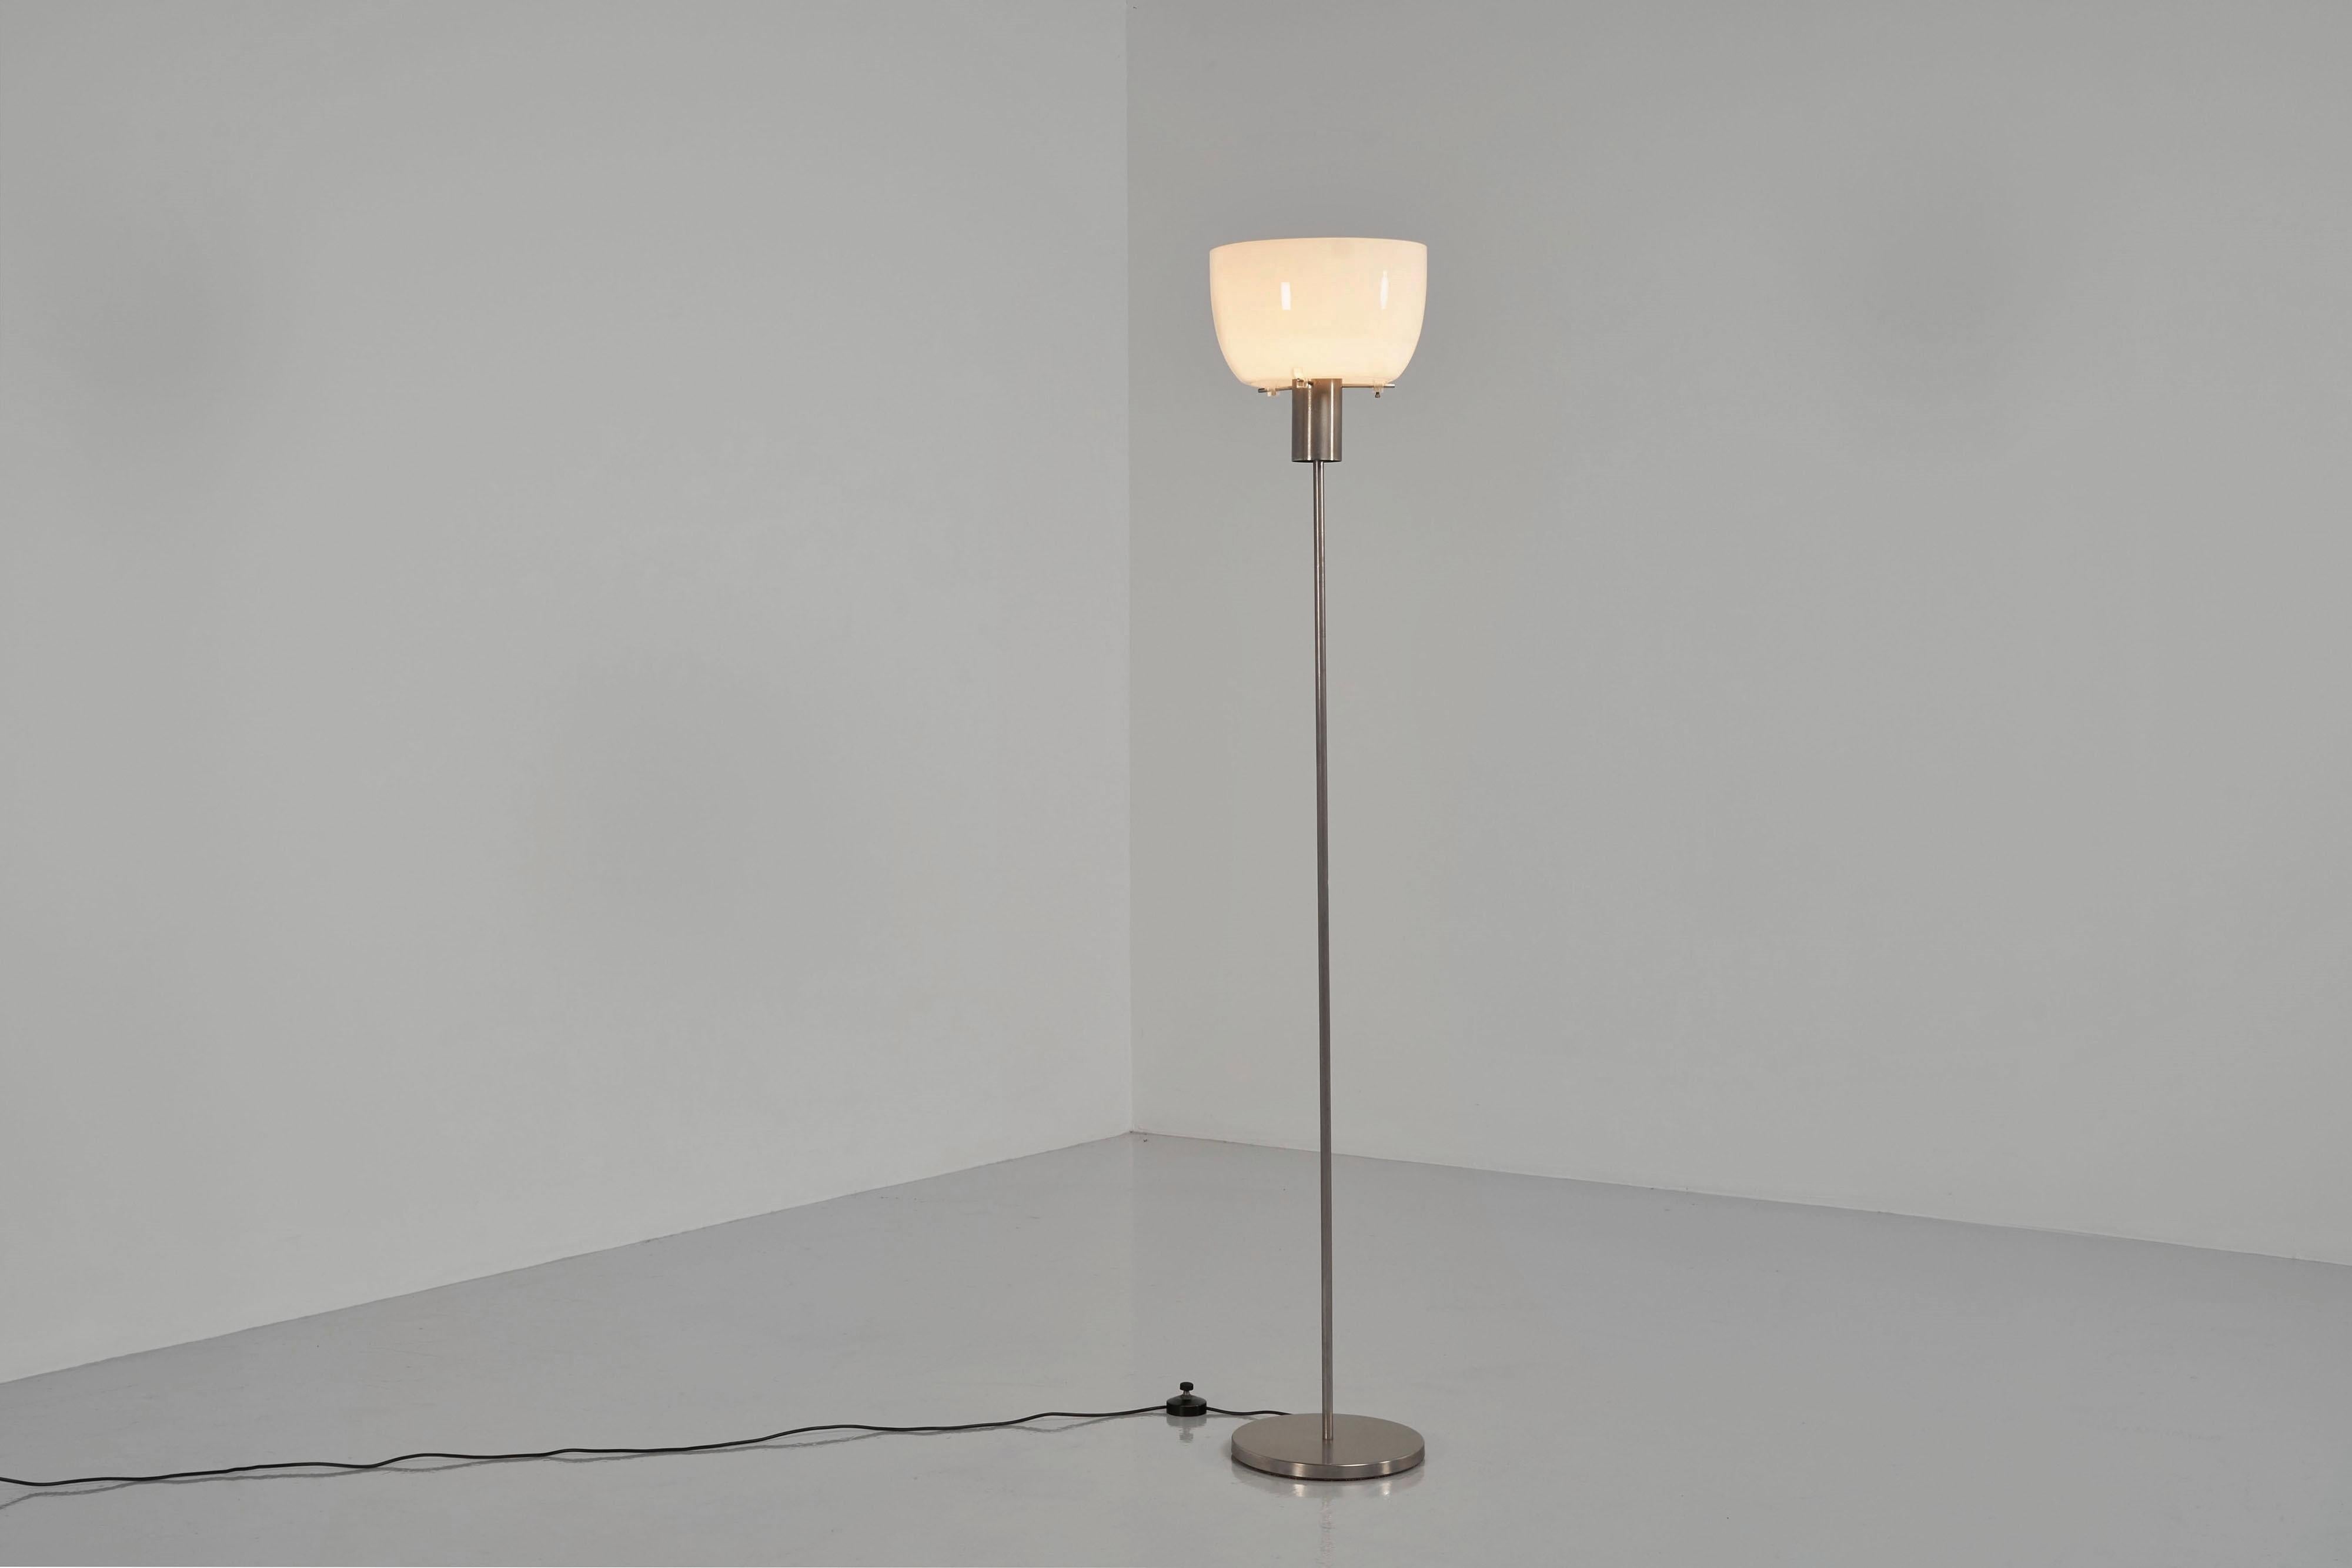 Plated Giuseppe Ostuni Renato Forti 3306 floor lamp Oluce 1955 For Sale